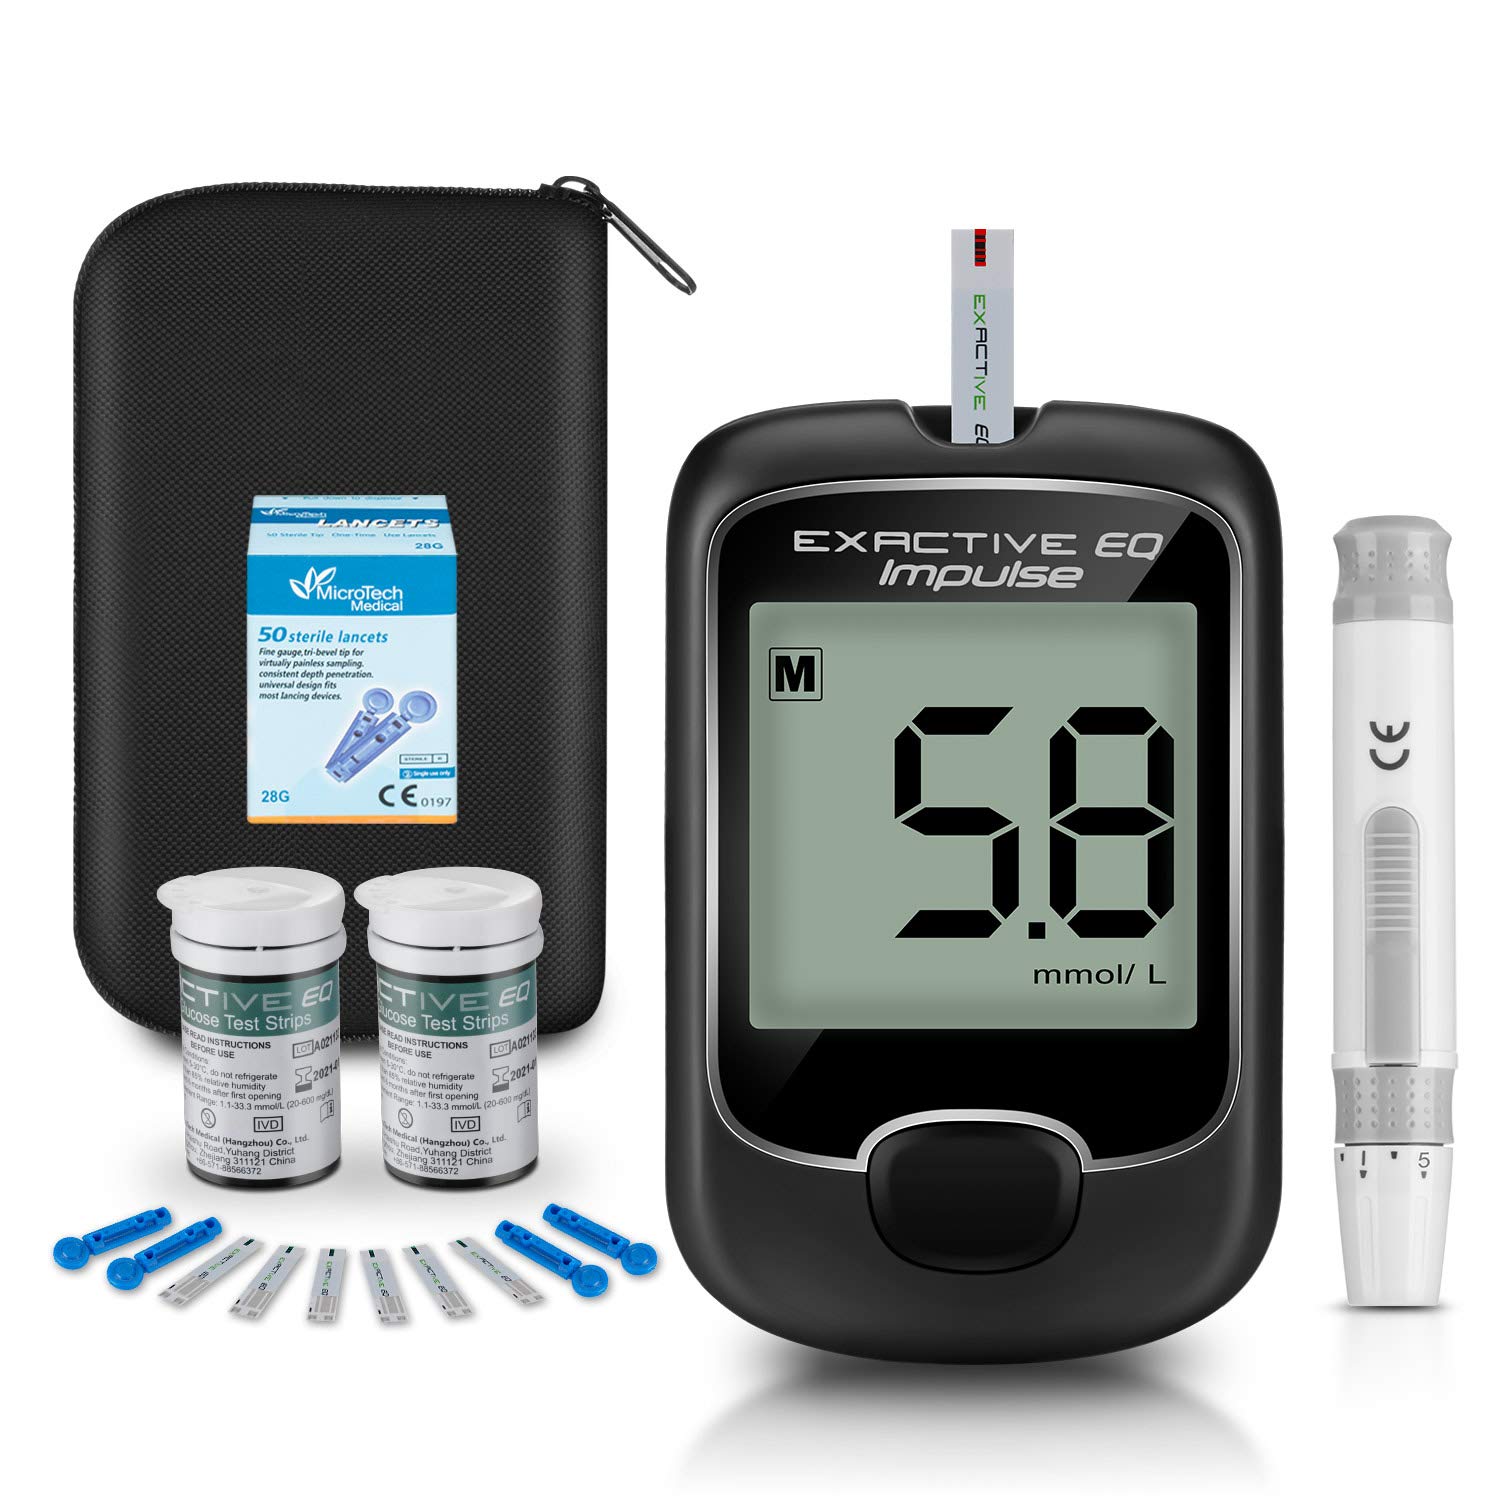 Can I Buy A Diabetes Test Kit